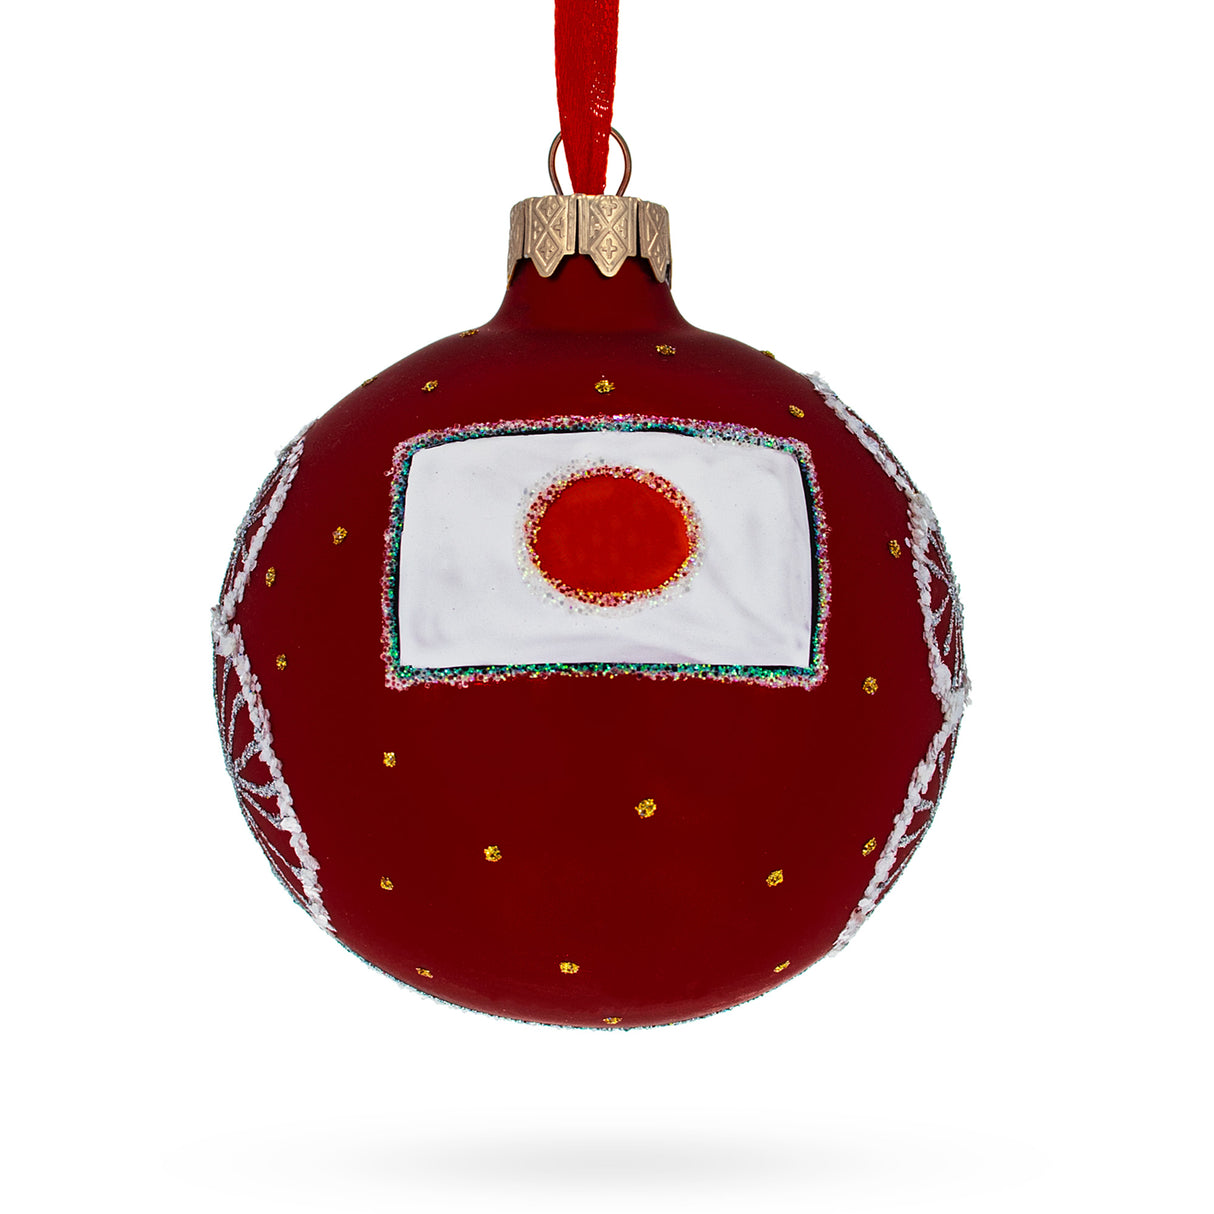 Buy Christmas Ornaments > Travel > Asia > Japan by BestPysanky Online Gift Ship